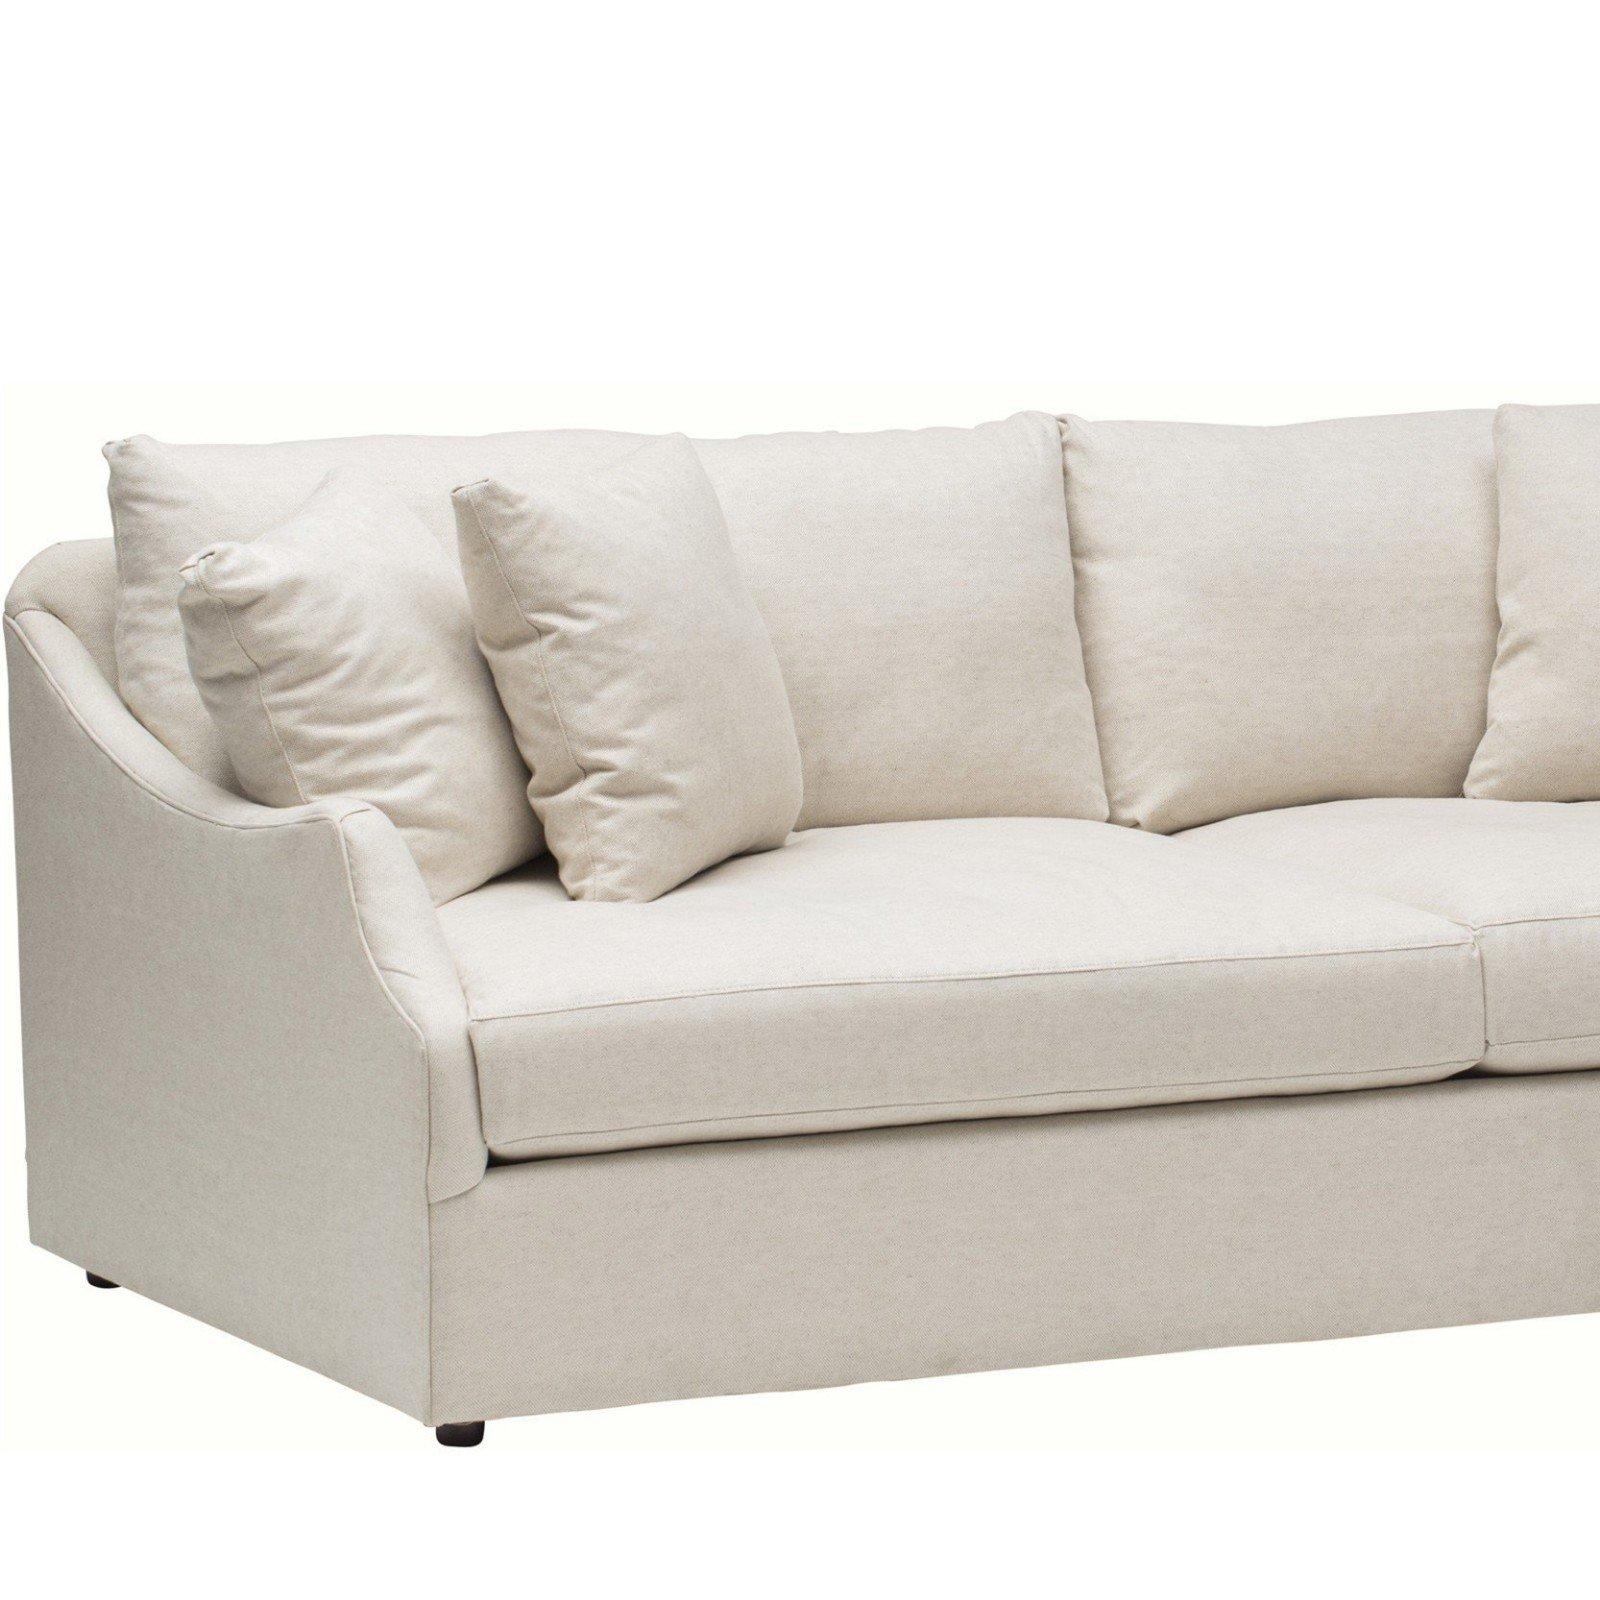 Wholesale upholstery pp spunbond nonwoven fabric Nanqixing Brand